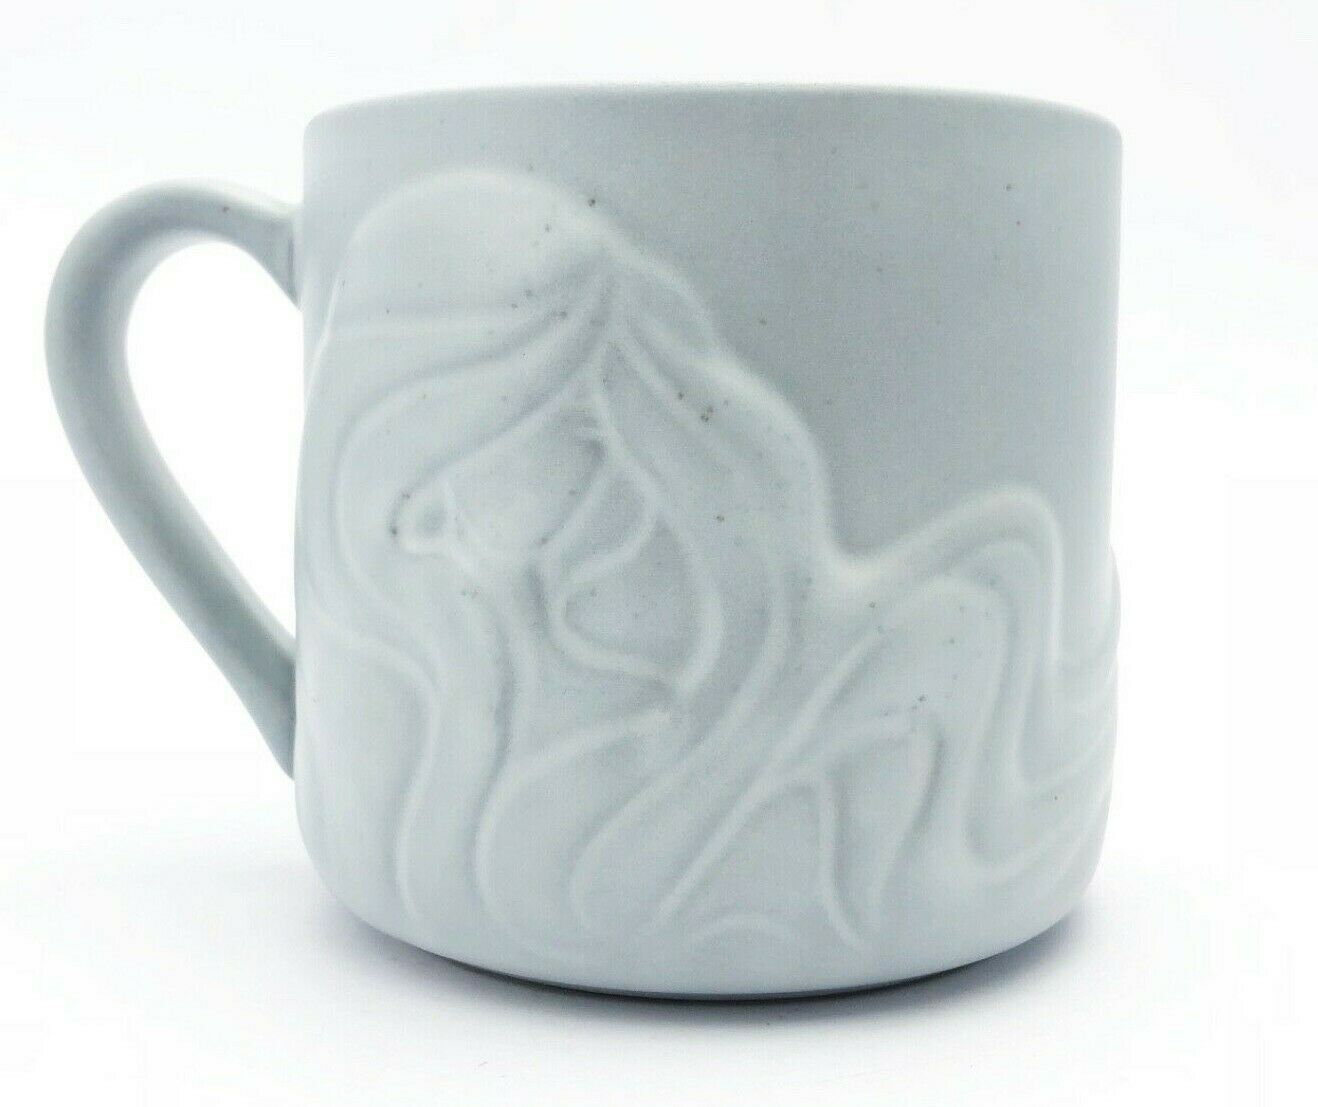 2005 White Starbucks Coffee Mug 9 Fl Oz Green & Black Mermaid Siren Logo Cup